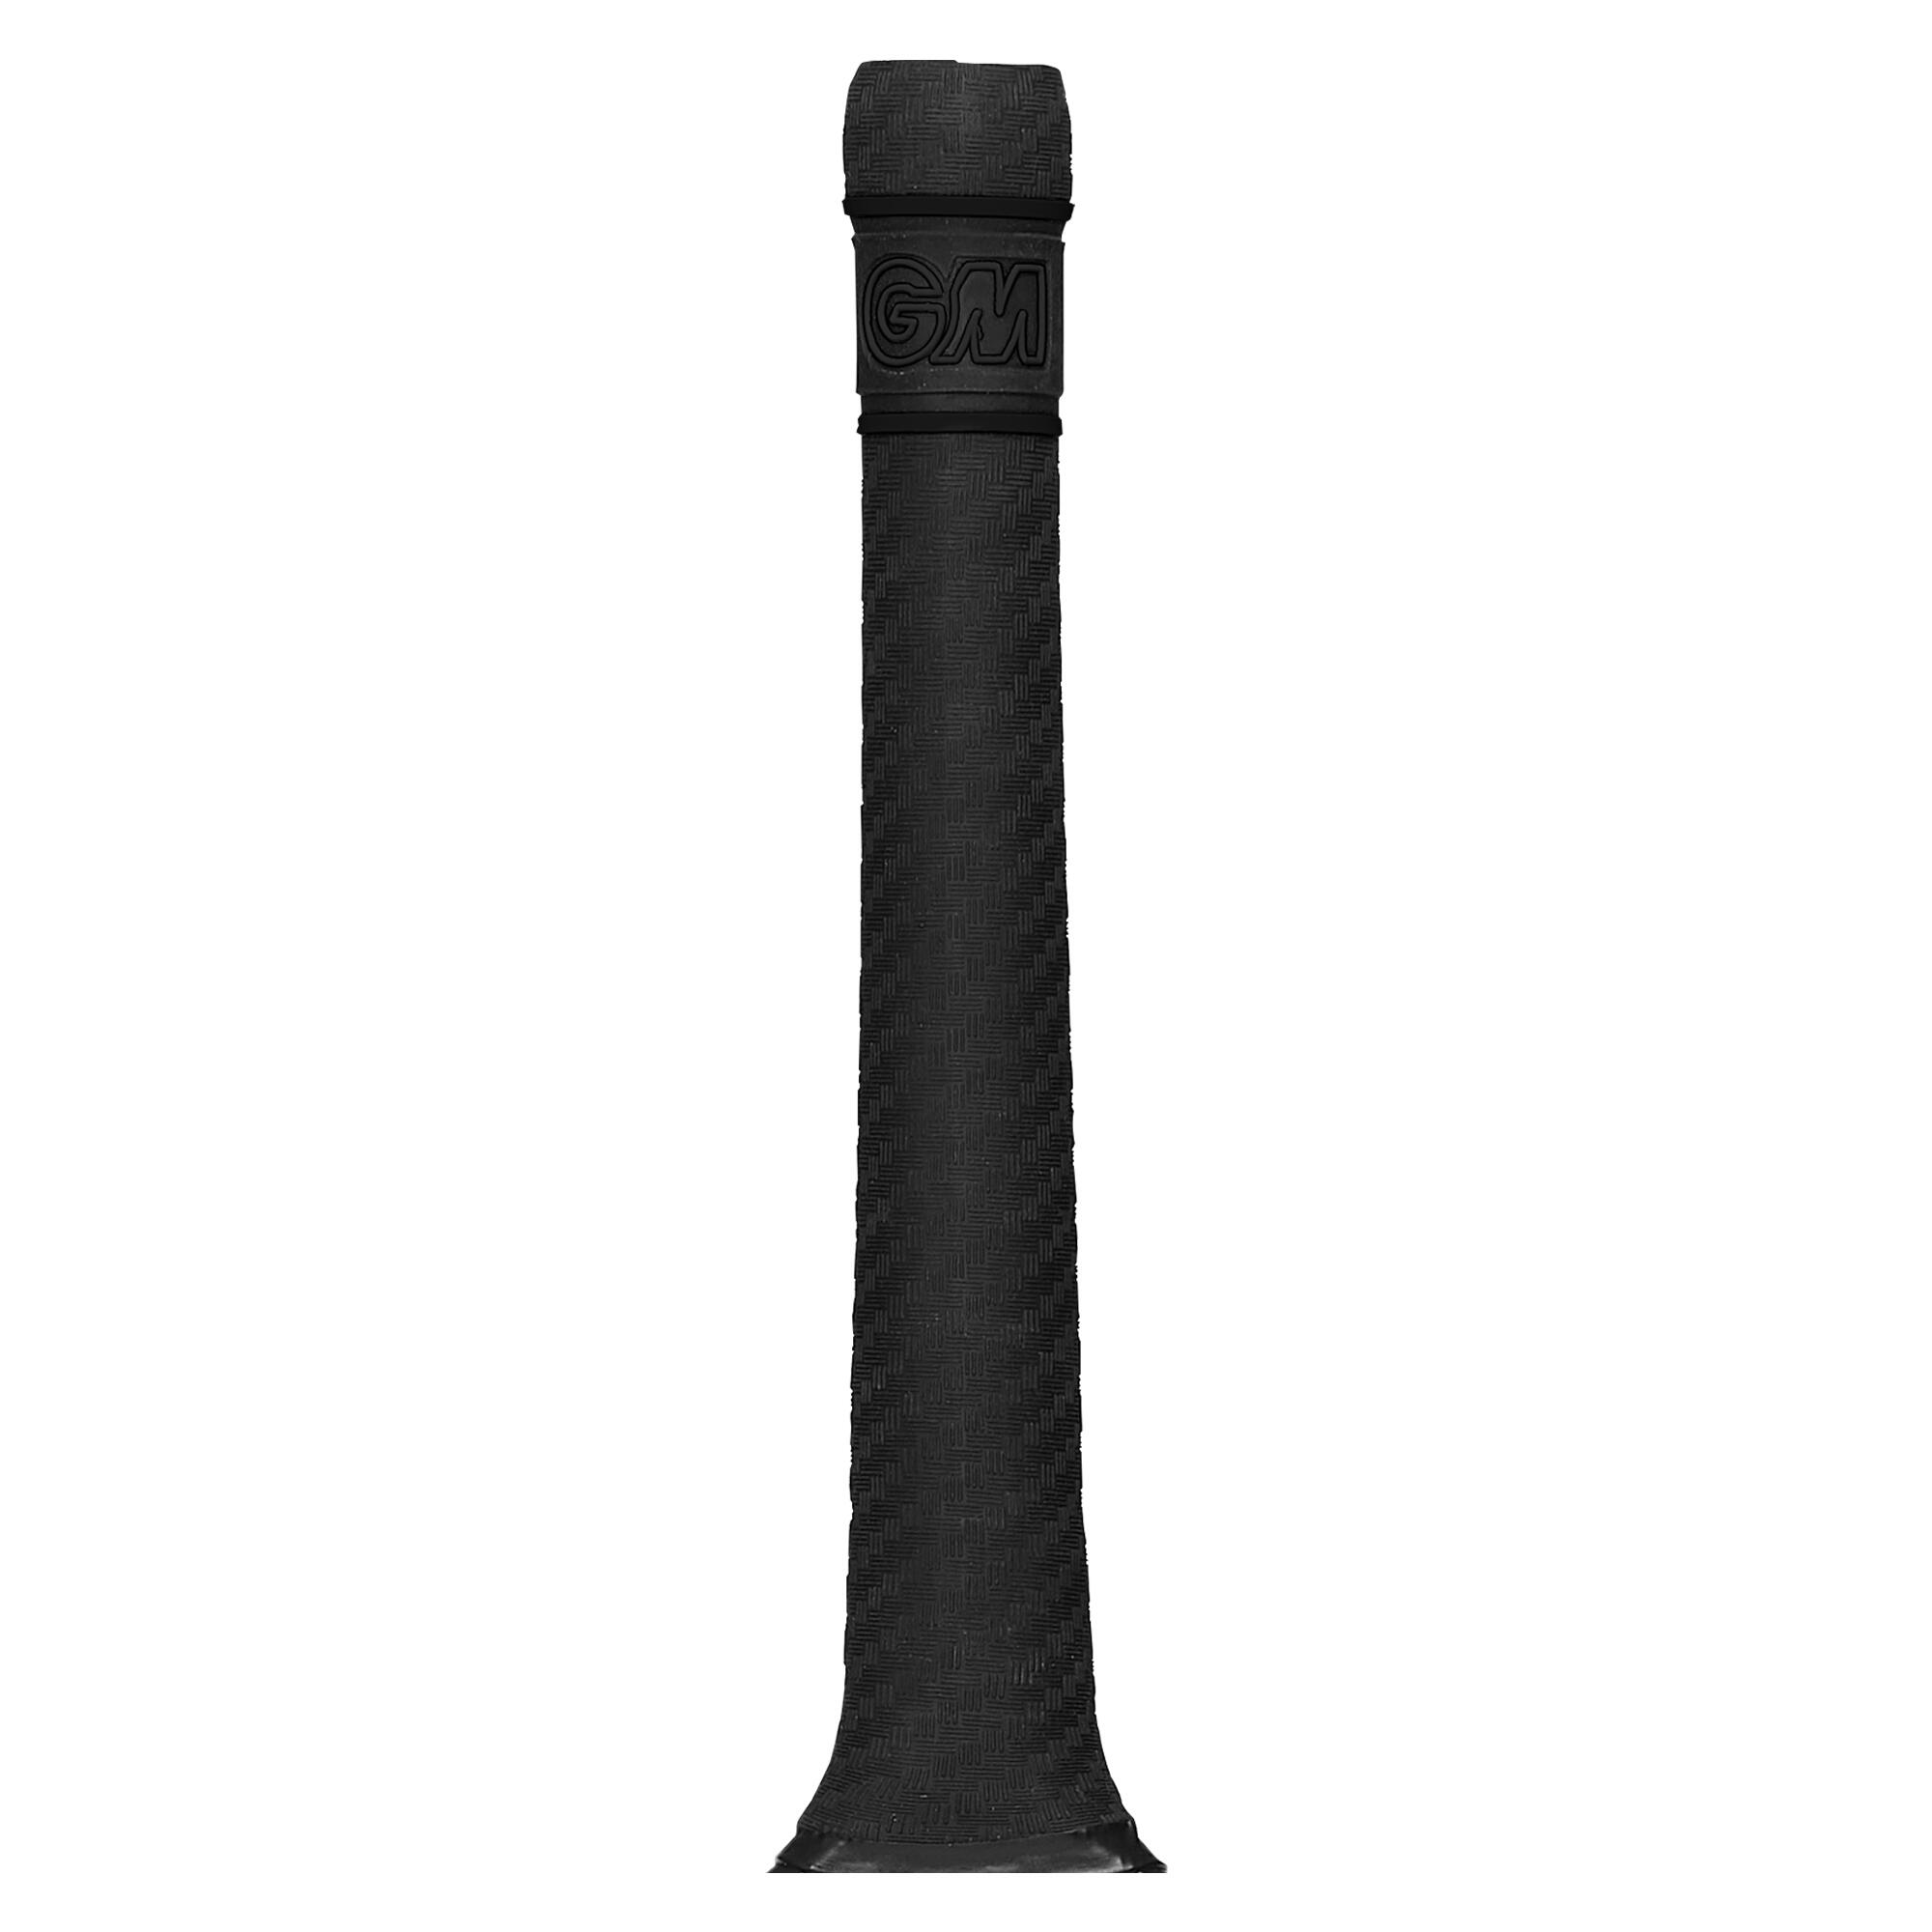 GM Cricket Bat Grip Fuze Black 1/1